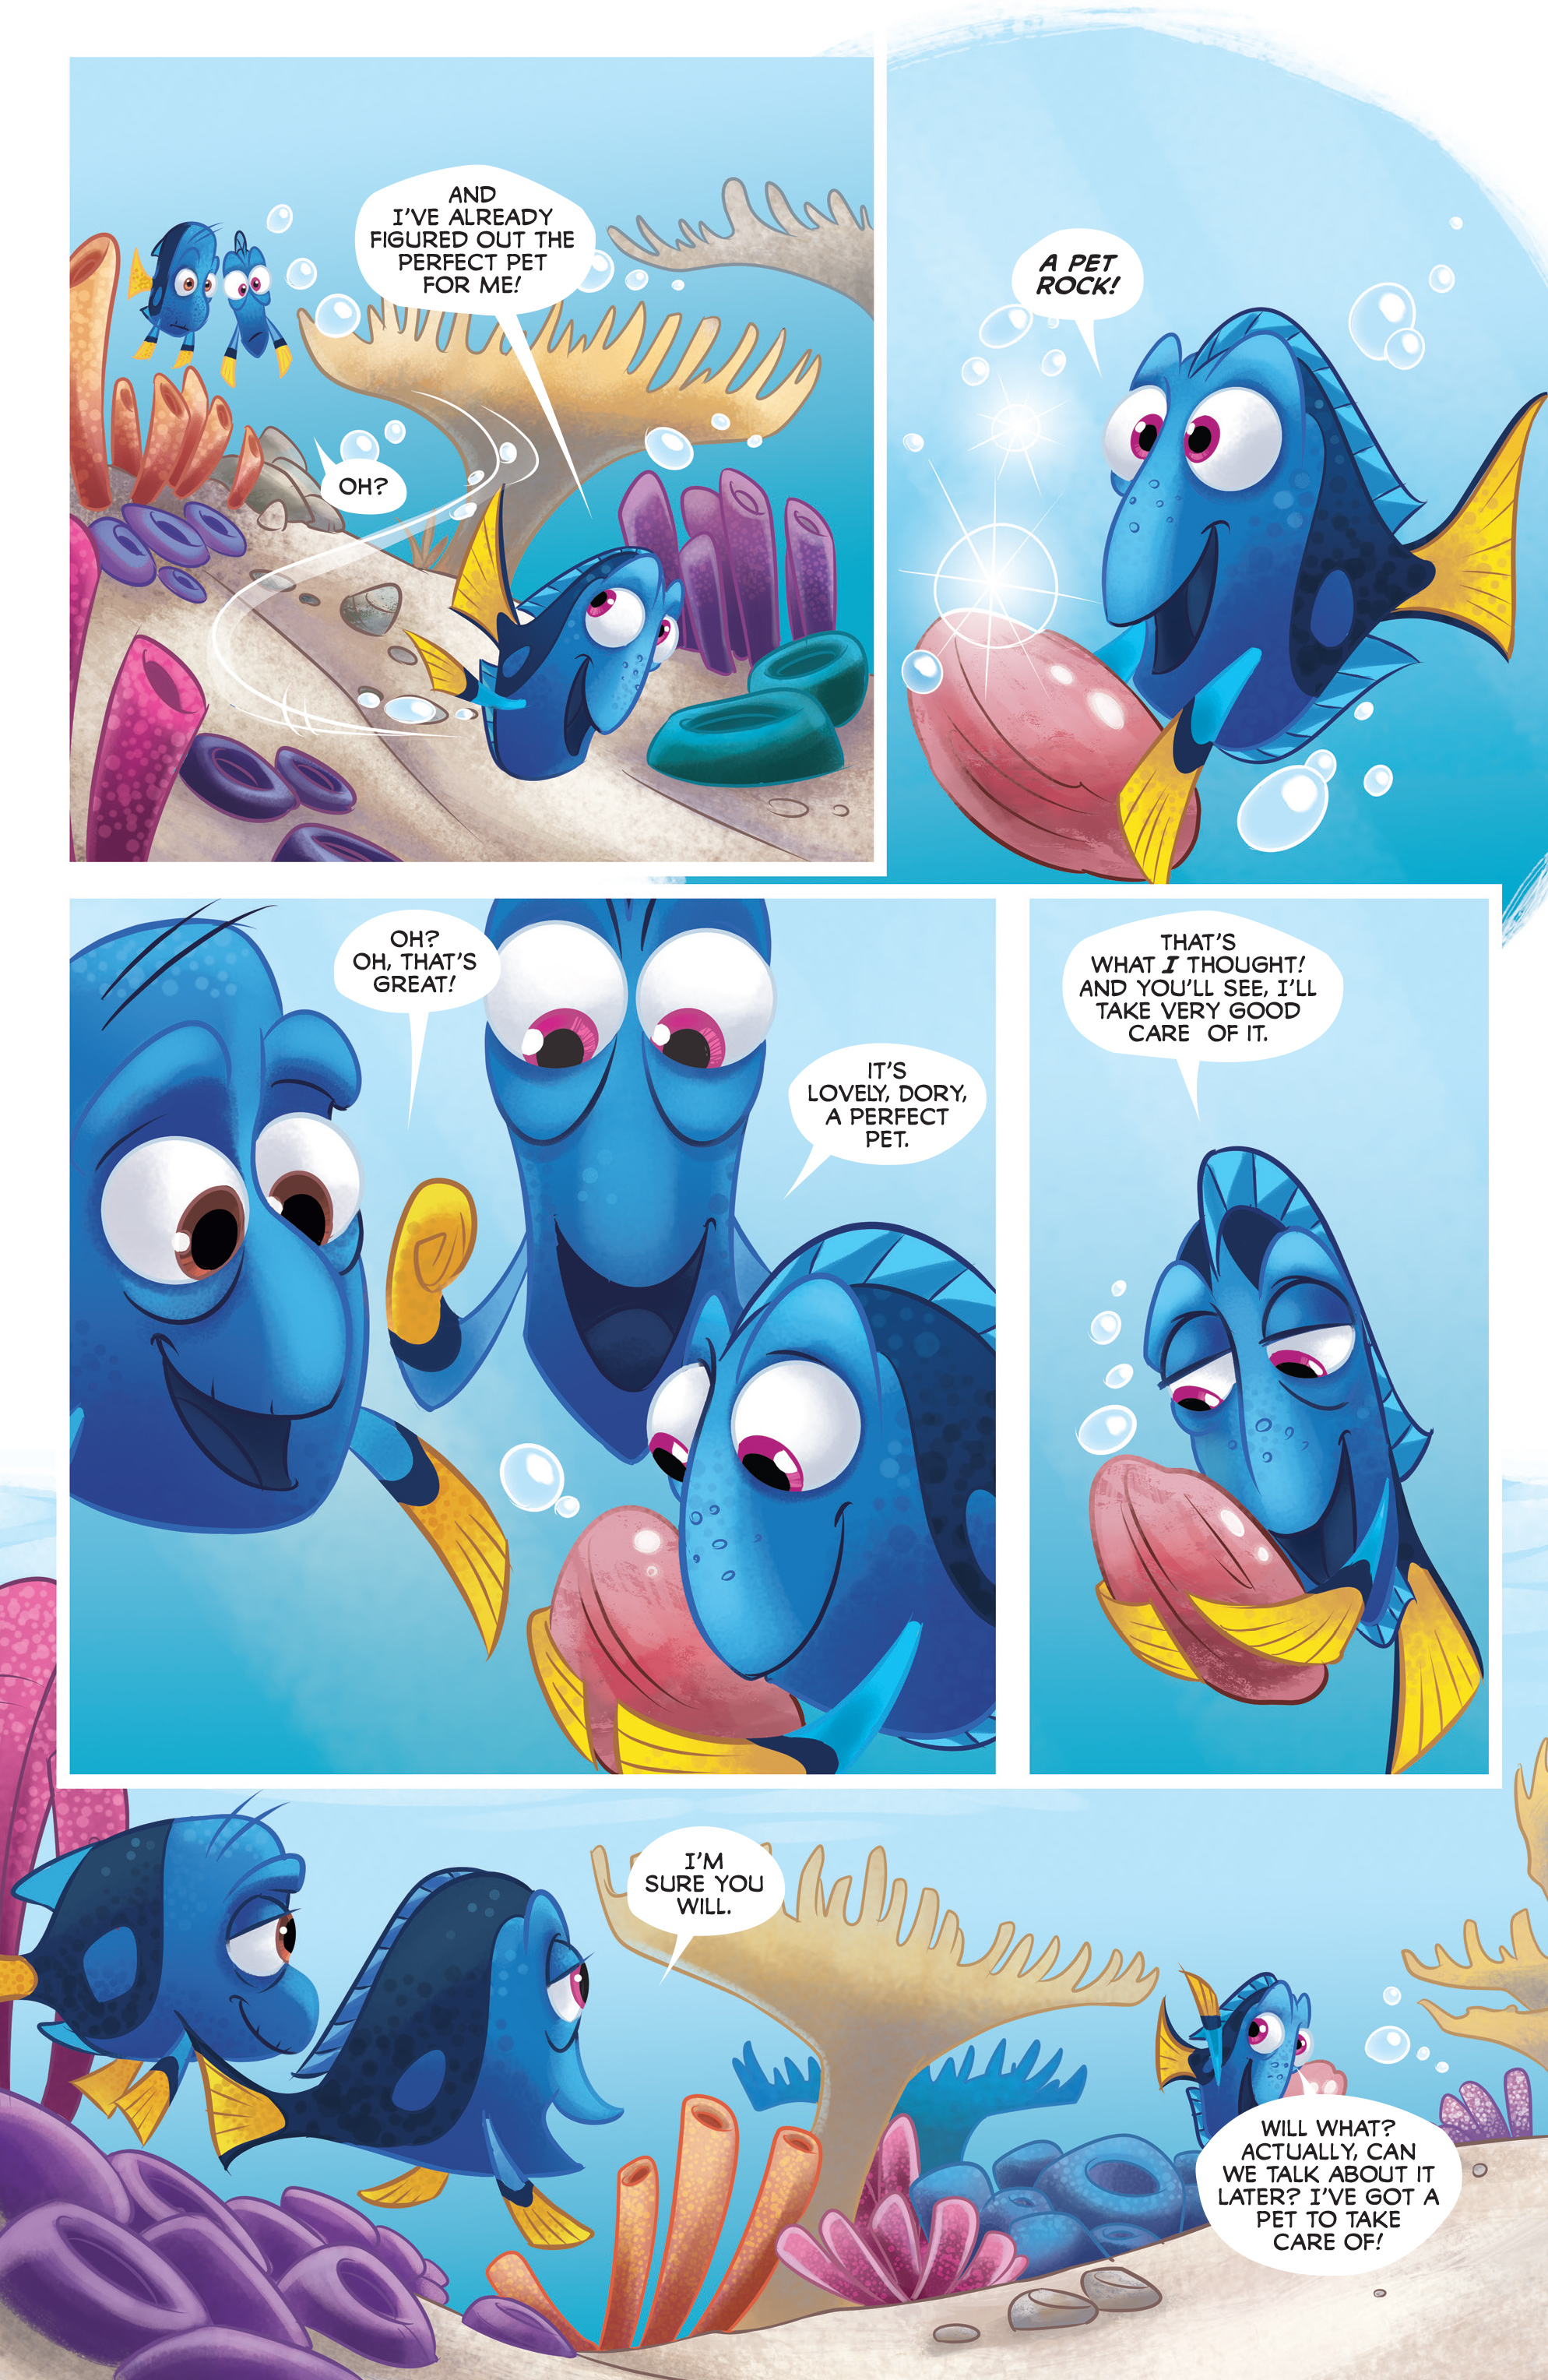 Disney Pixar Finding Dory Issue 2 | Read Disney Pixar Finding Dory Issue 2  comic online in high quality. Read Full Comic online for free - Read comics  online in high quality .| READ COMIC ONLINE